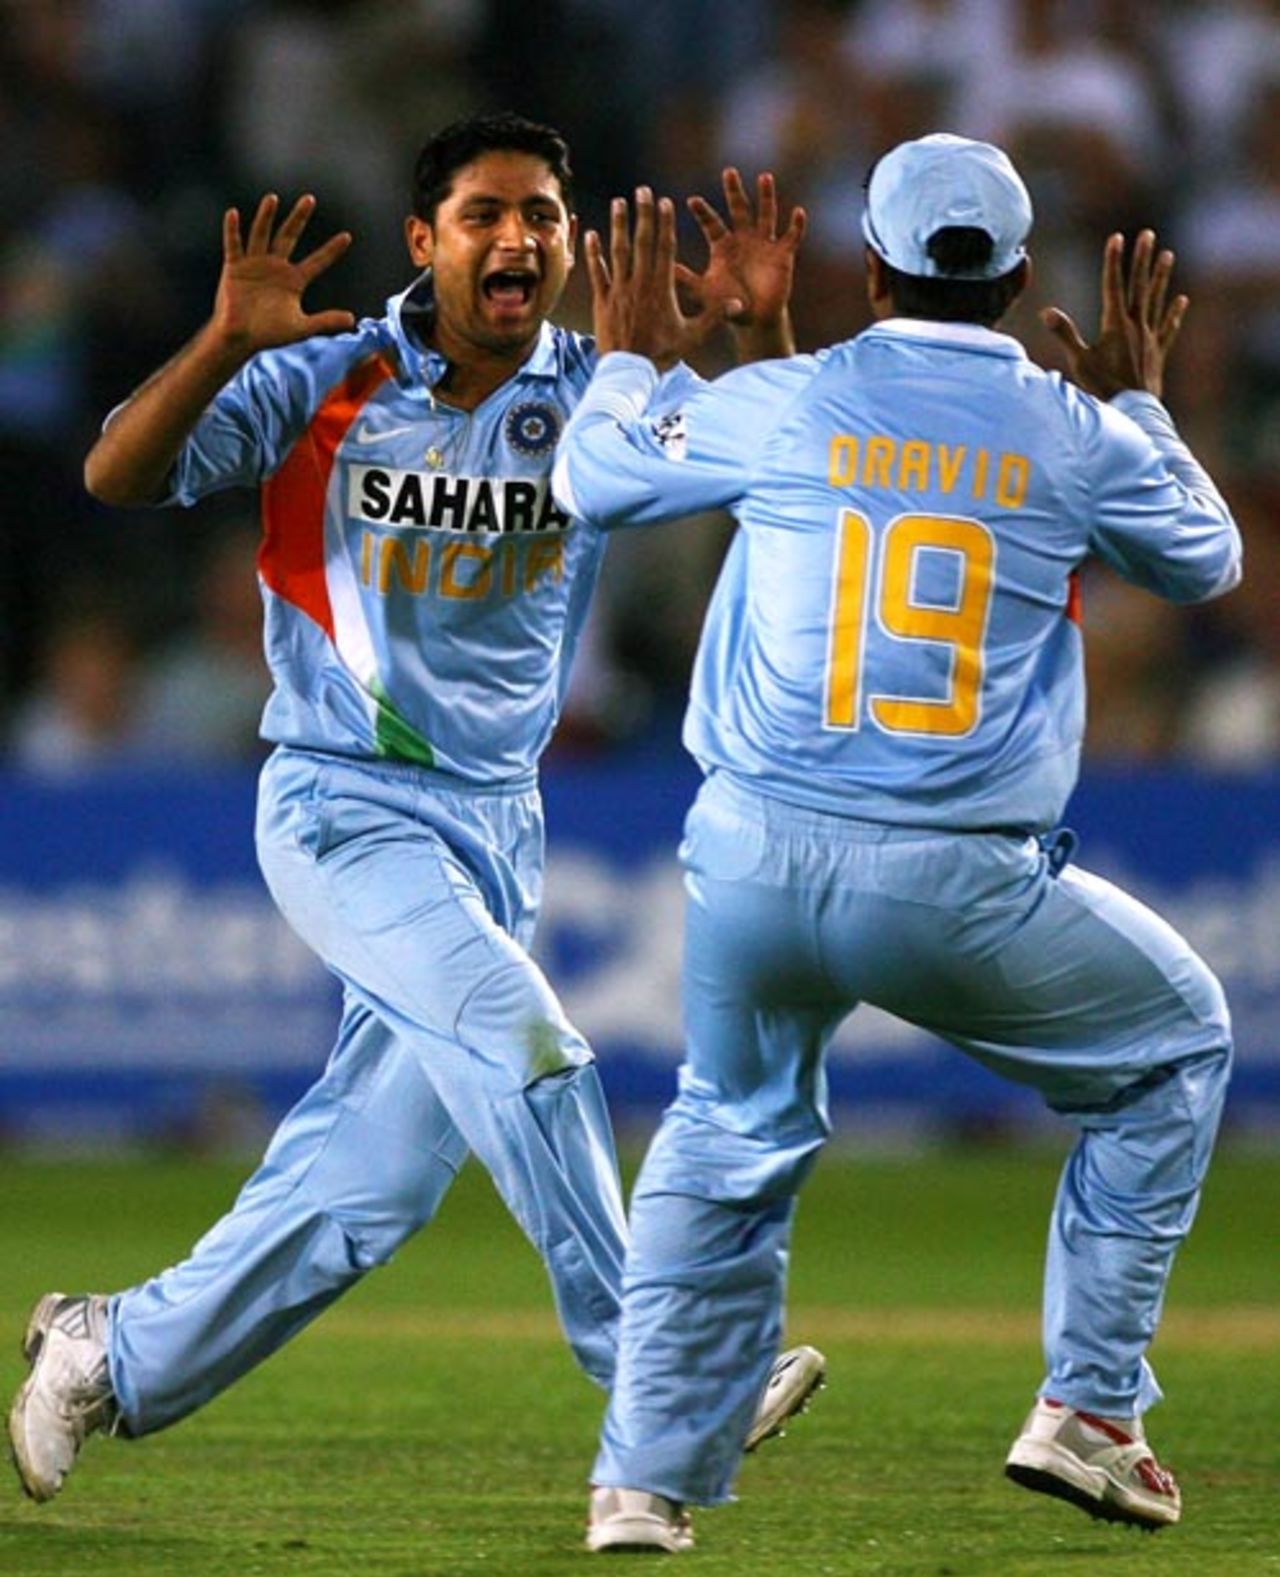 Rahul Dravid and Piyush Chawla celebrate the dismissal of Kevin Pietersen, England v India, 2nd ODI, Bristol, August 24, 2007